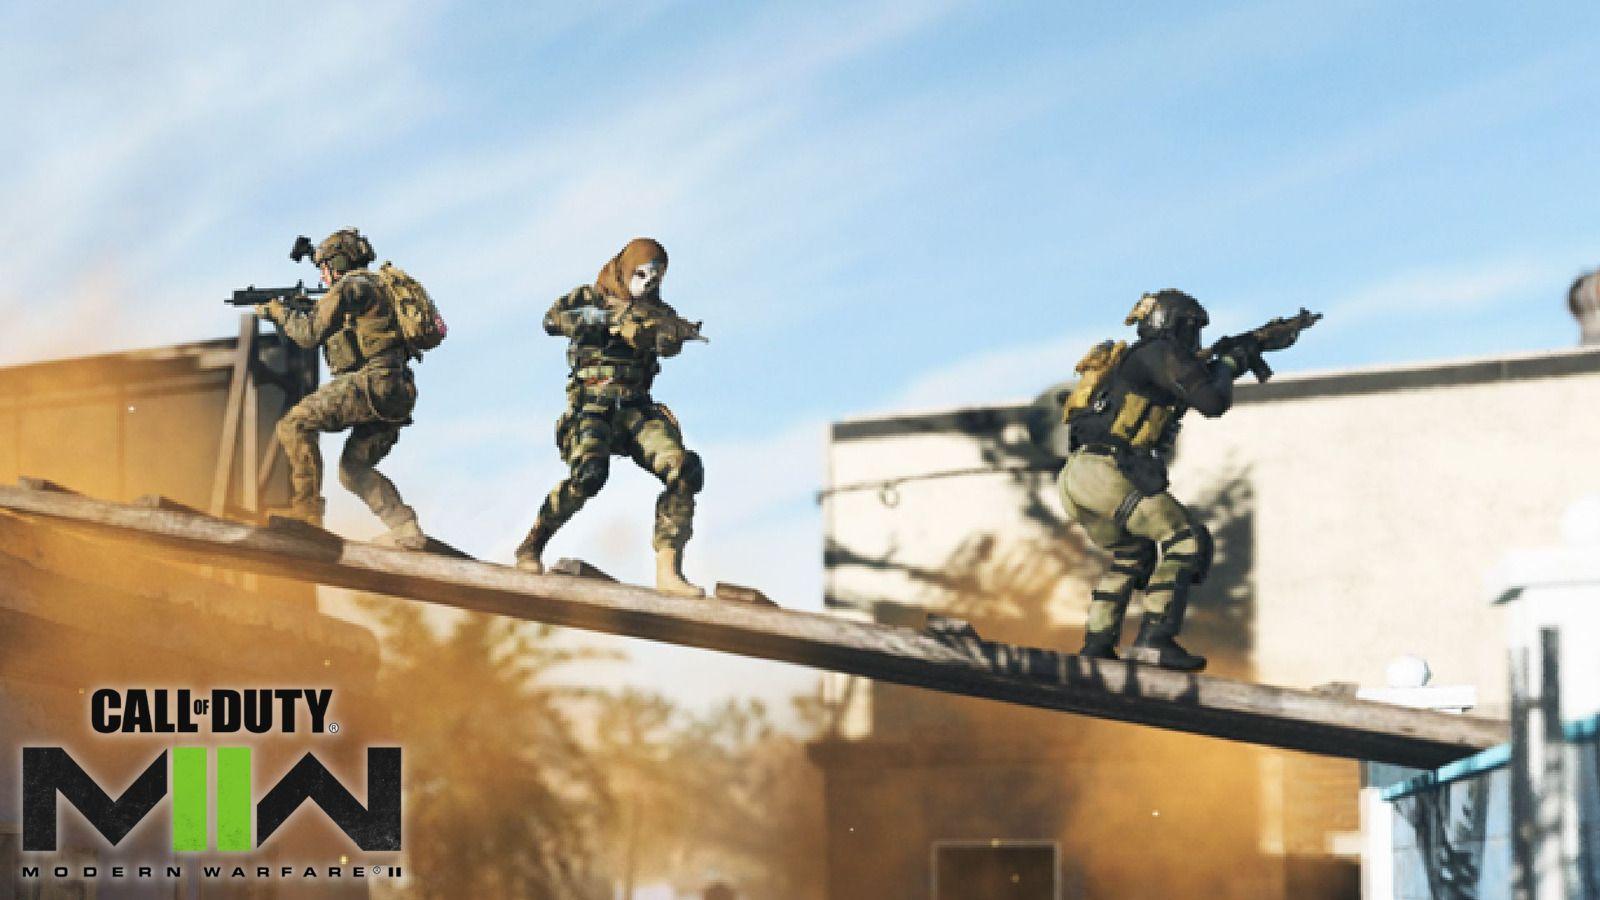 The UI Updates in Call of Duty: Modern Warfare 2 Season 2 Are Too Minor